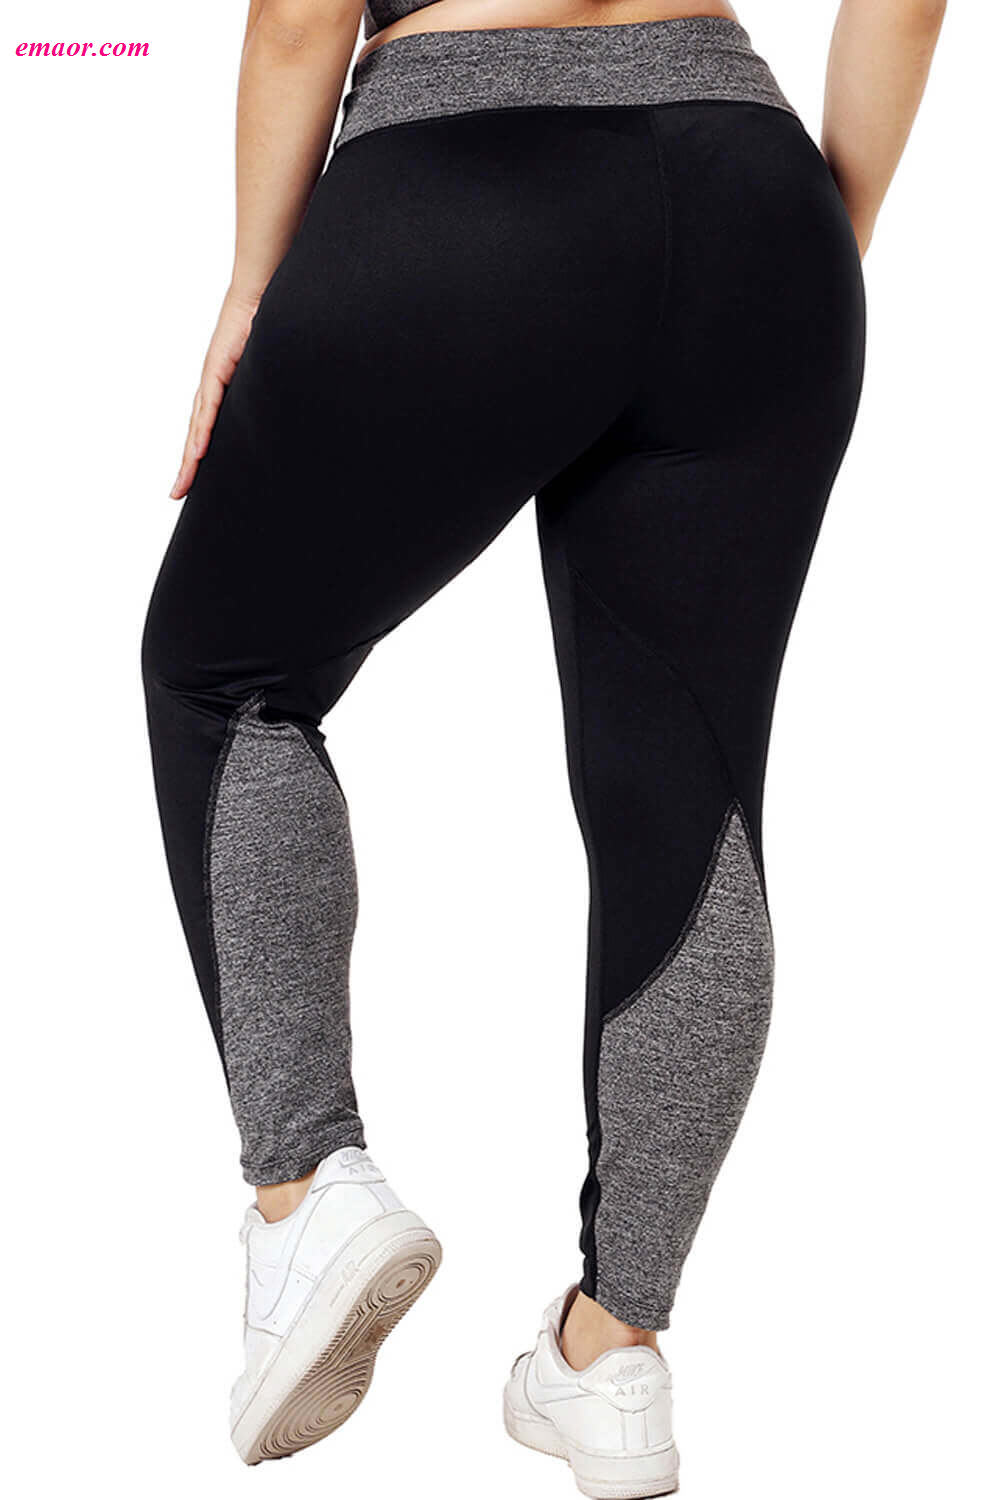 Hot Women‘s Heathered Splice Plus Size Girl’s Yoga Pants 